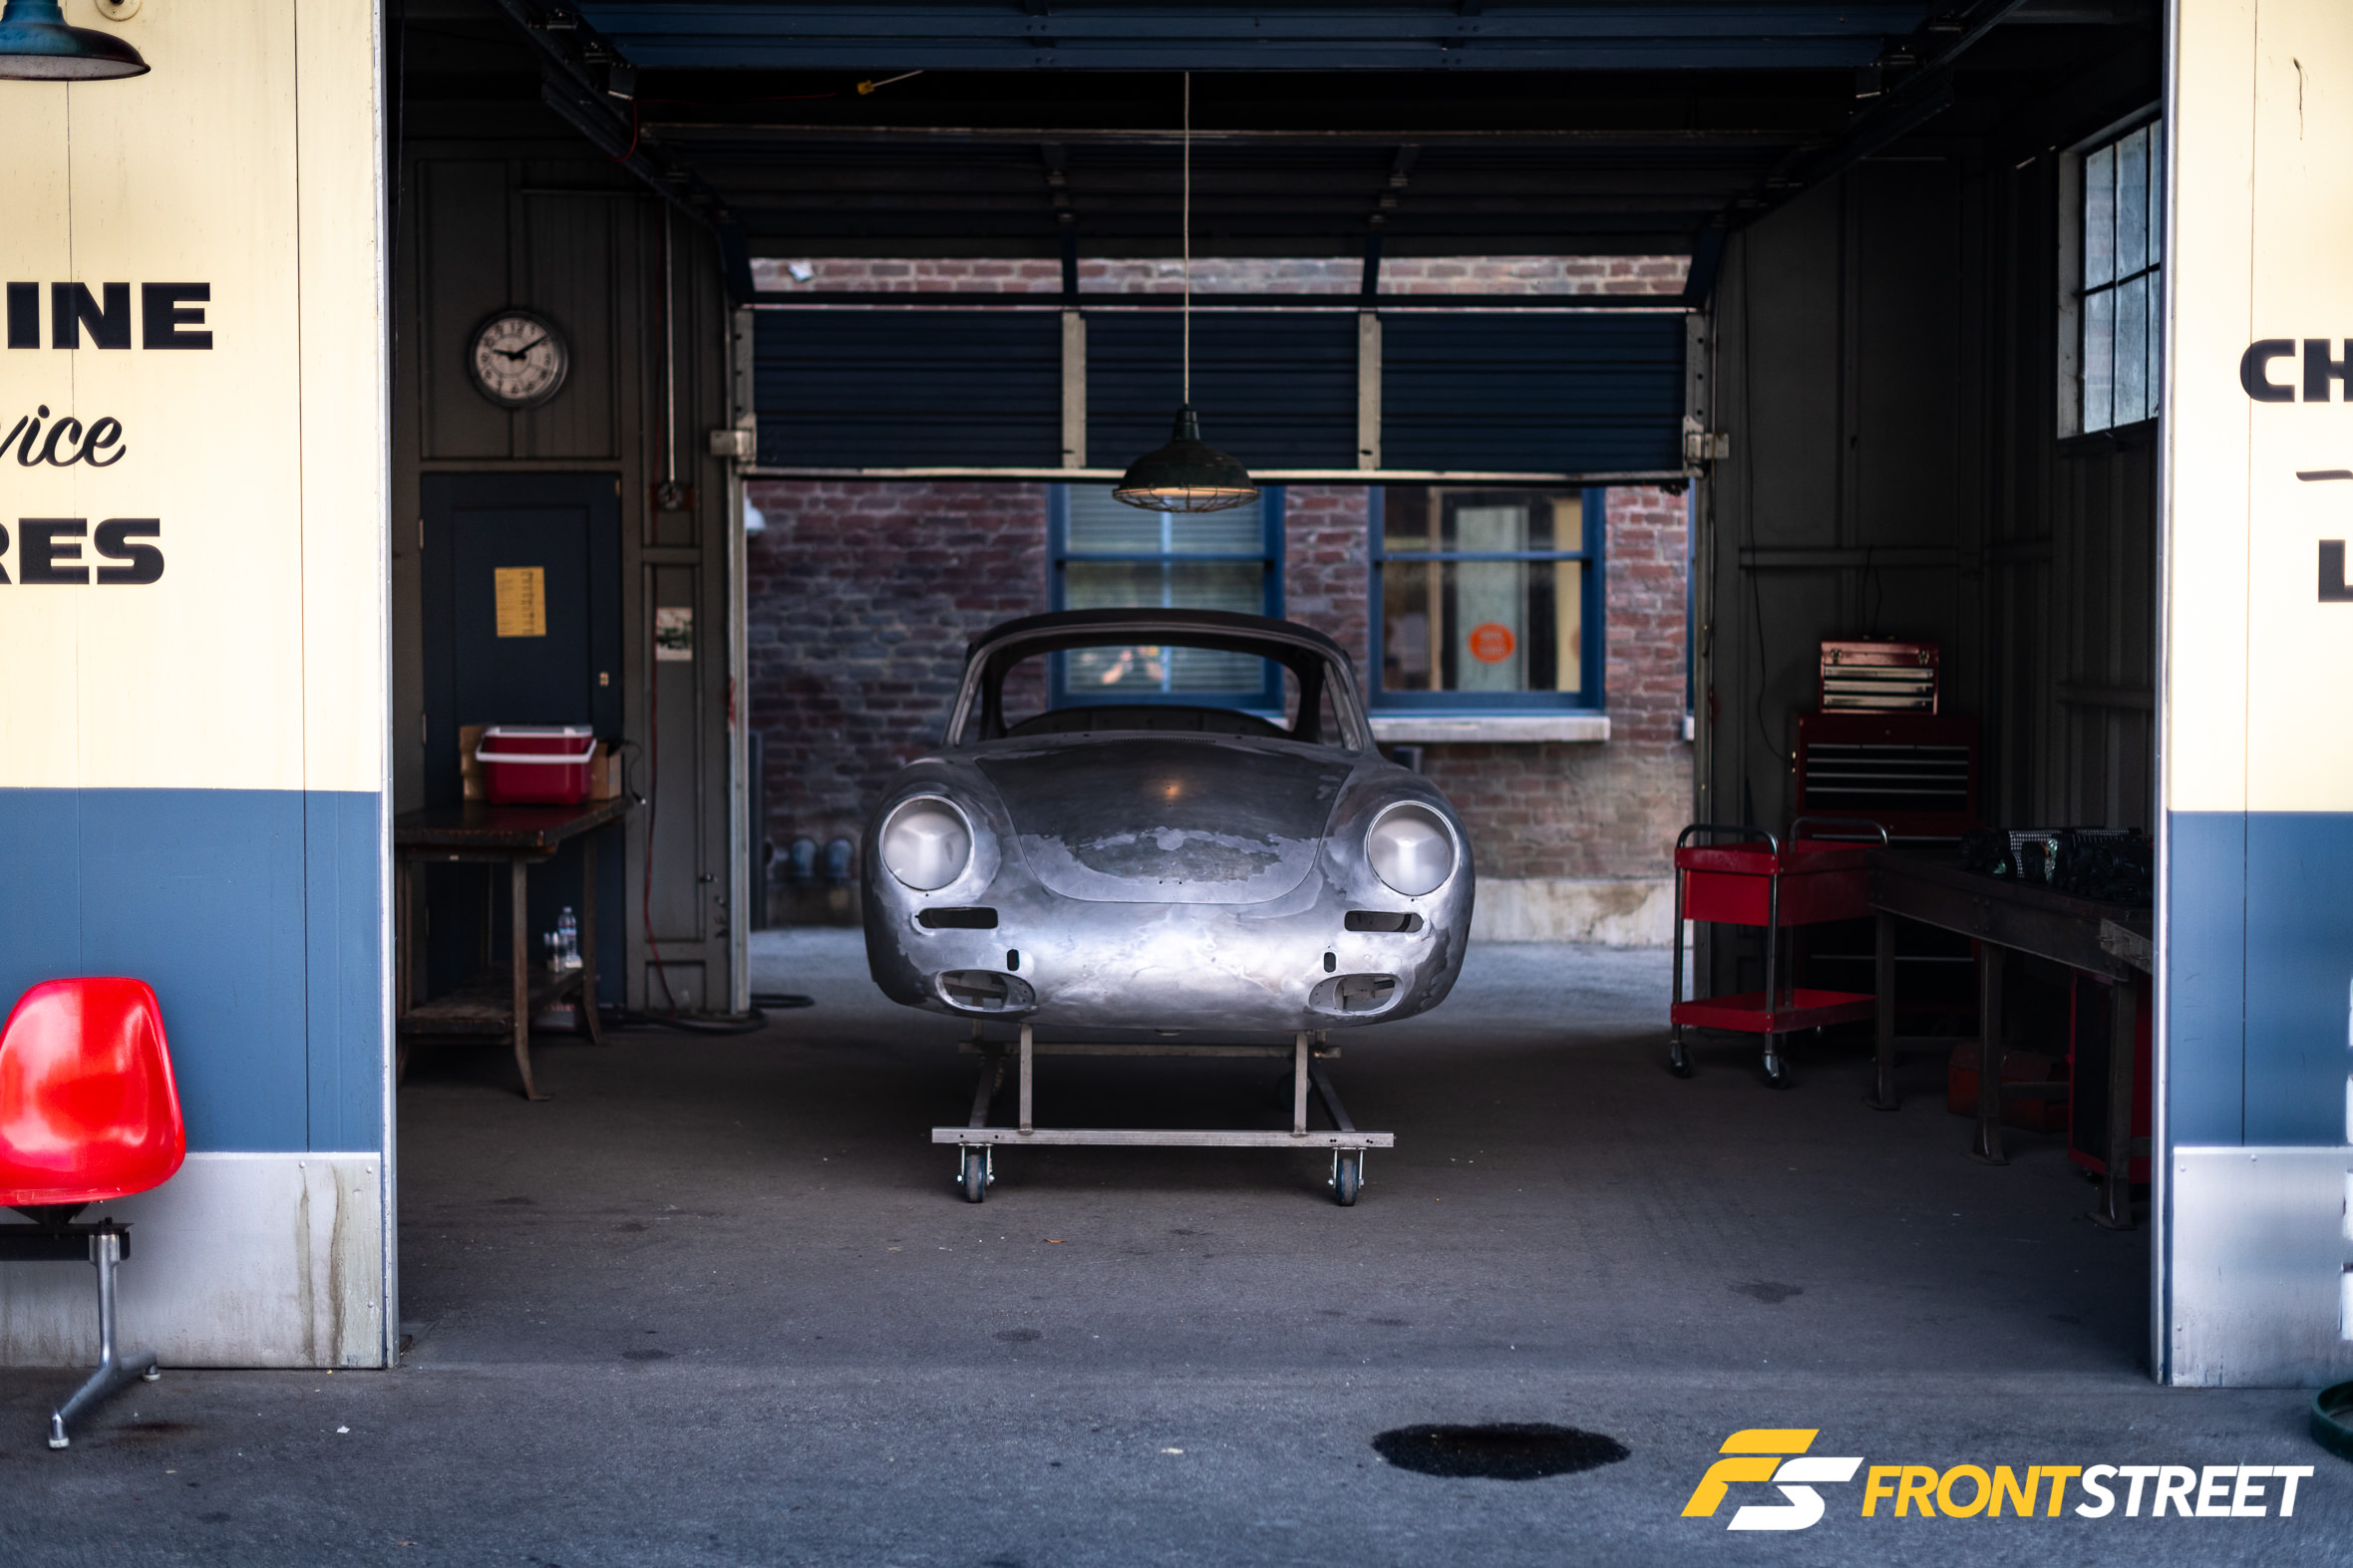 Luftgekühlt 6: Reimagining The Air-Cooled Porsche Car Show